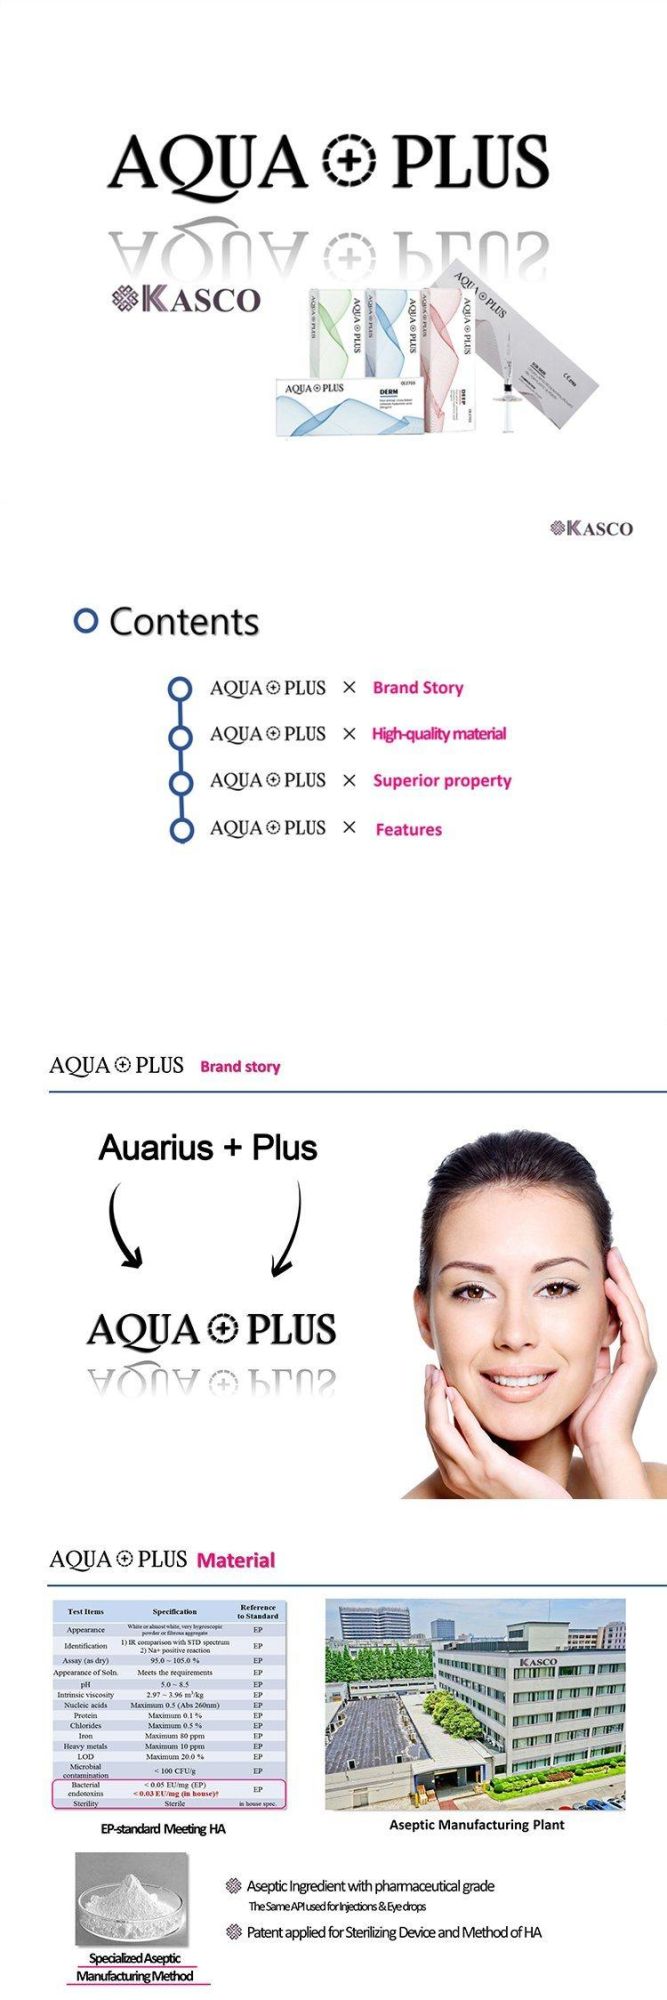 Aqua Plus Top-Selling Dermal Filler Injectable/Hyaluronic Acid Dermal Filler 2ml Vials